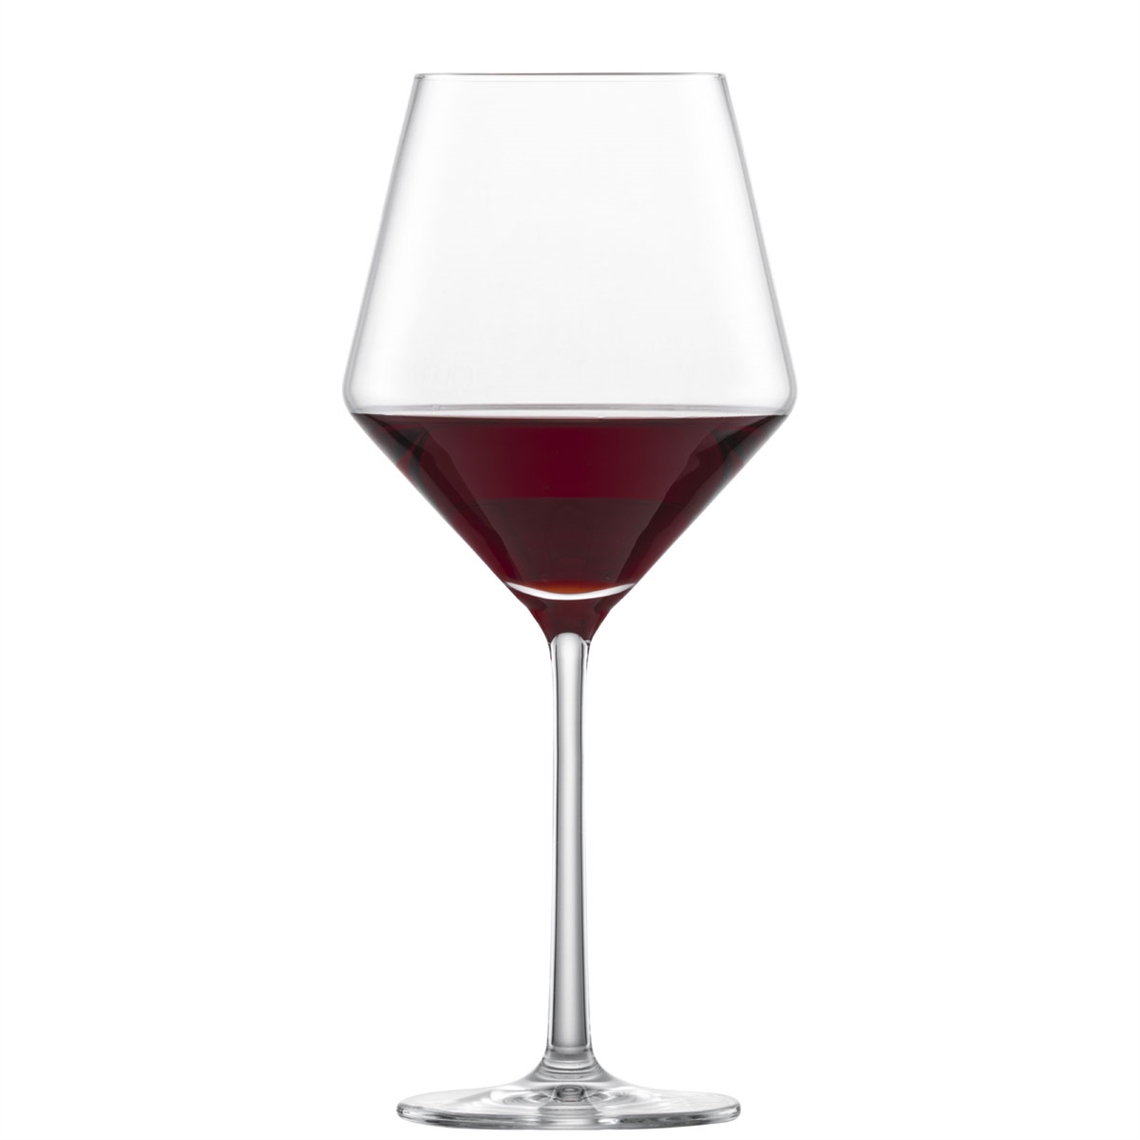 Schott Zwiesel Restaurant Belfesta - Beaujolais Wine Glass 465ml